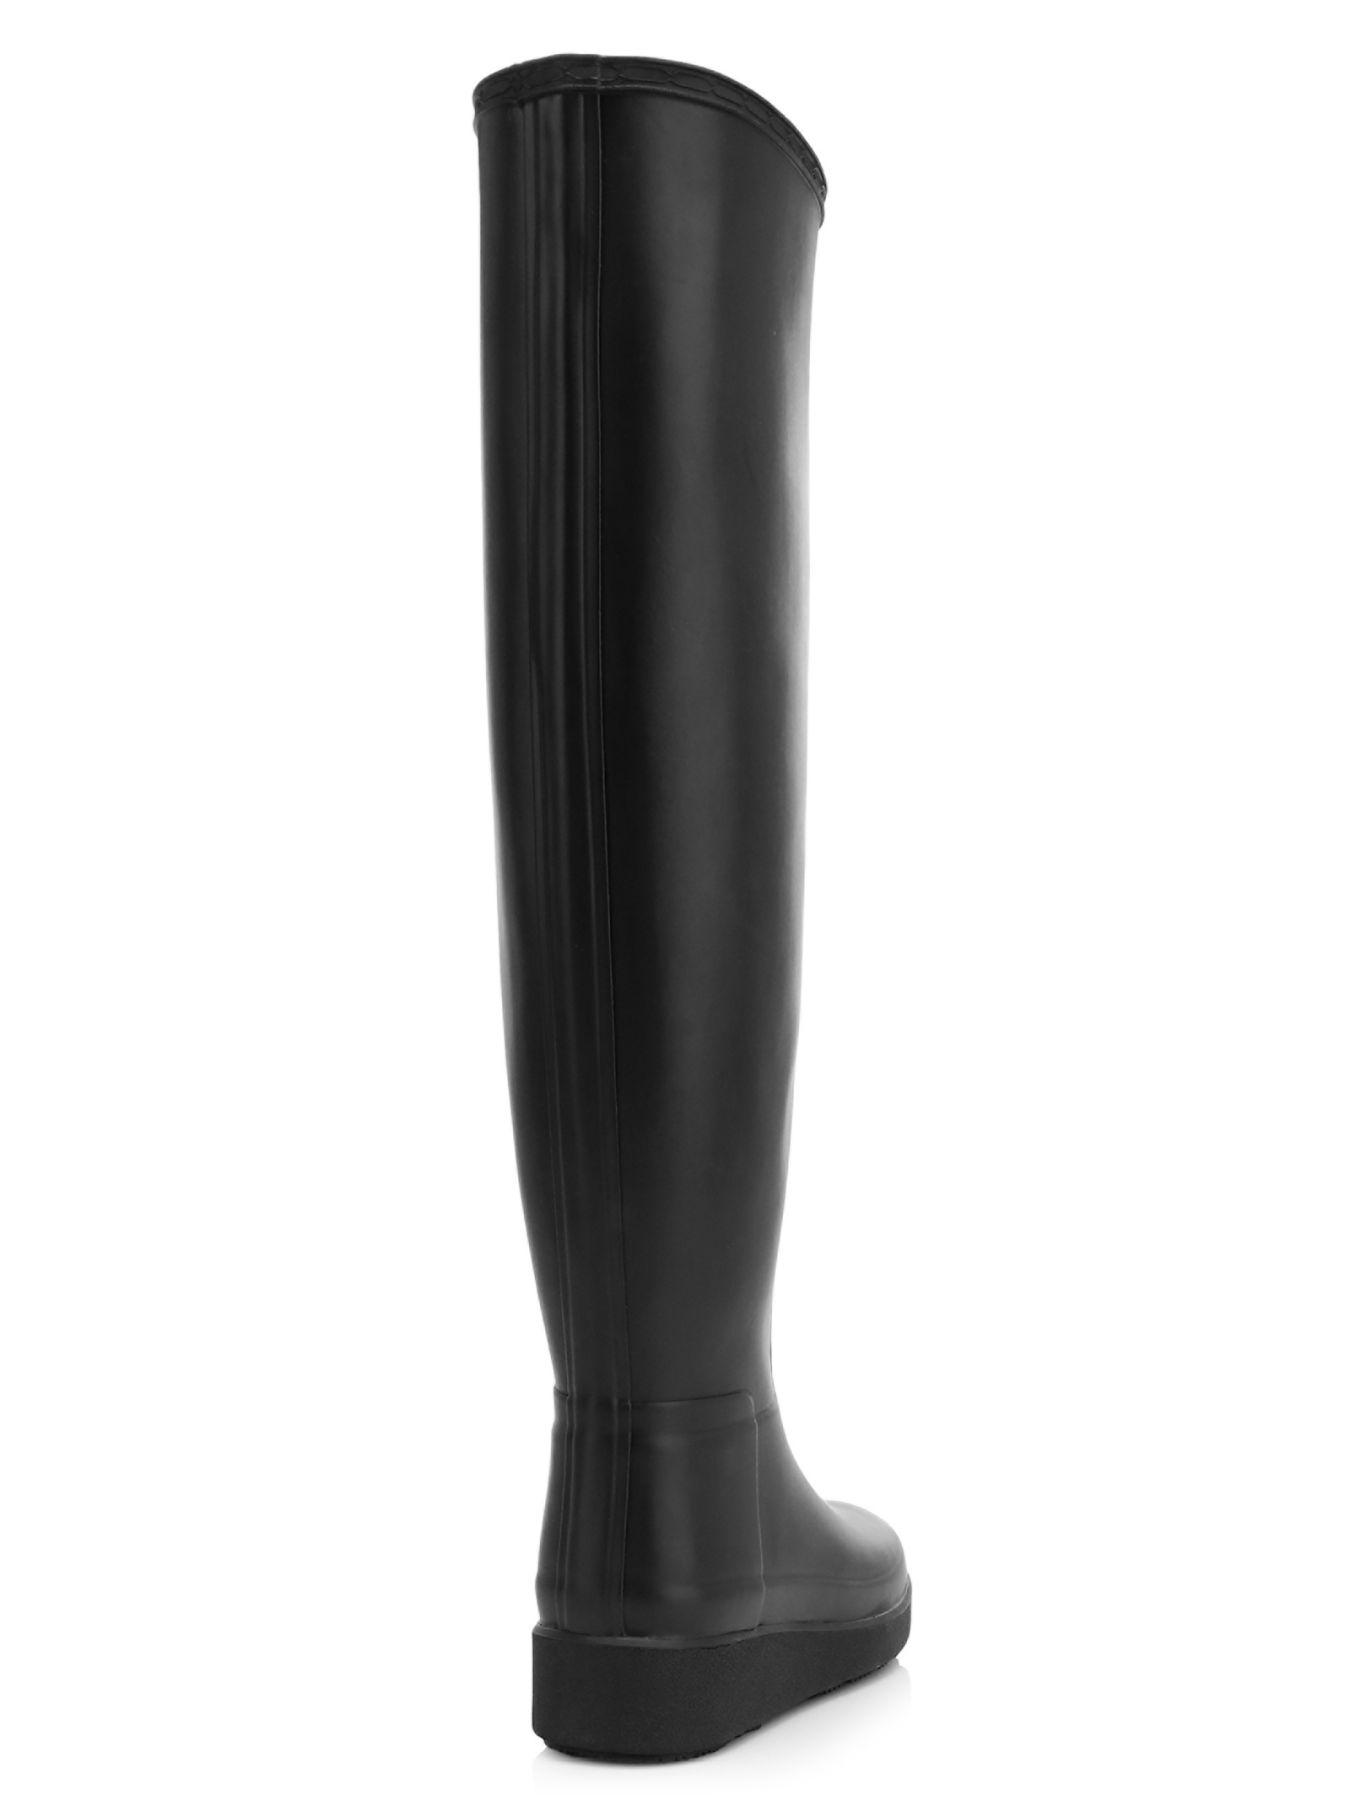 HUNTER Rubber Refined Creeper Tall Rain Boots in Black - Lyst